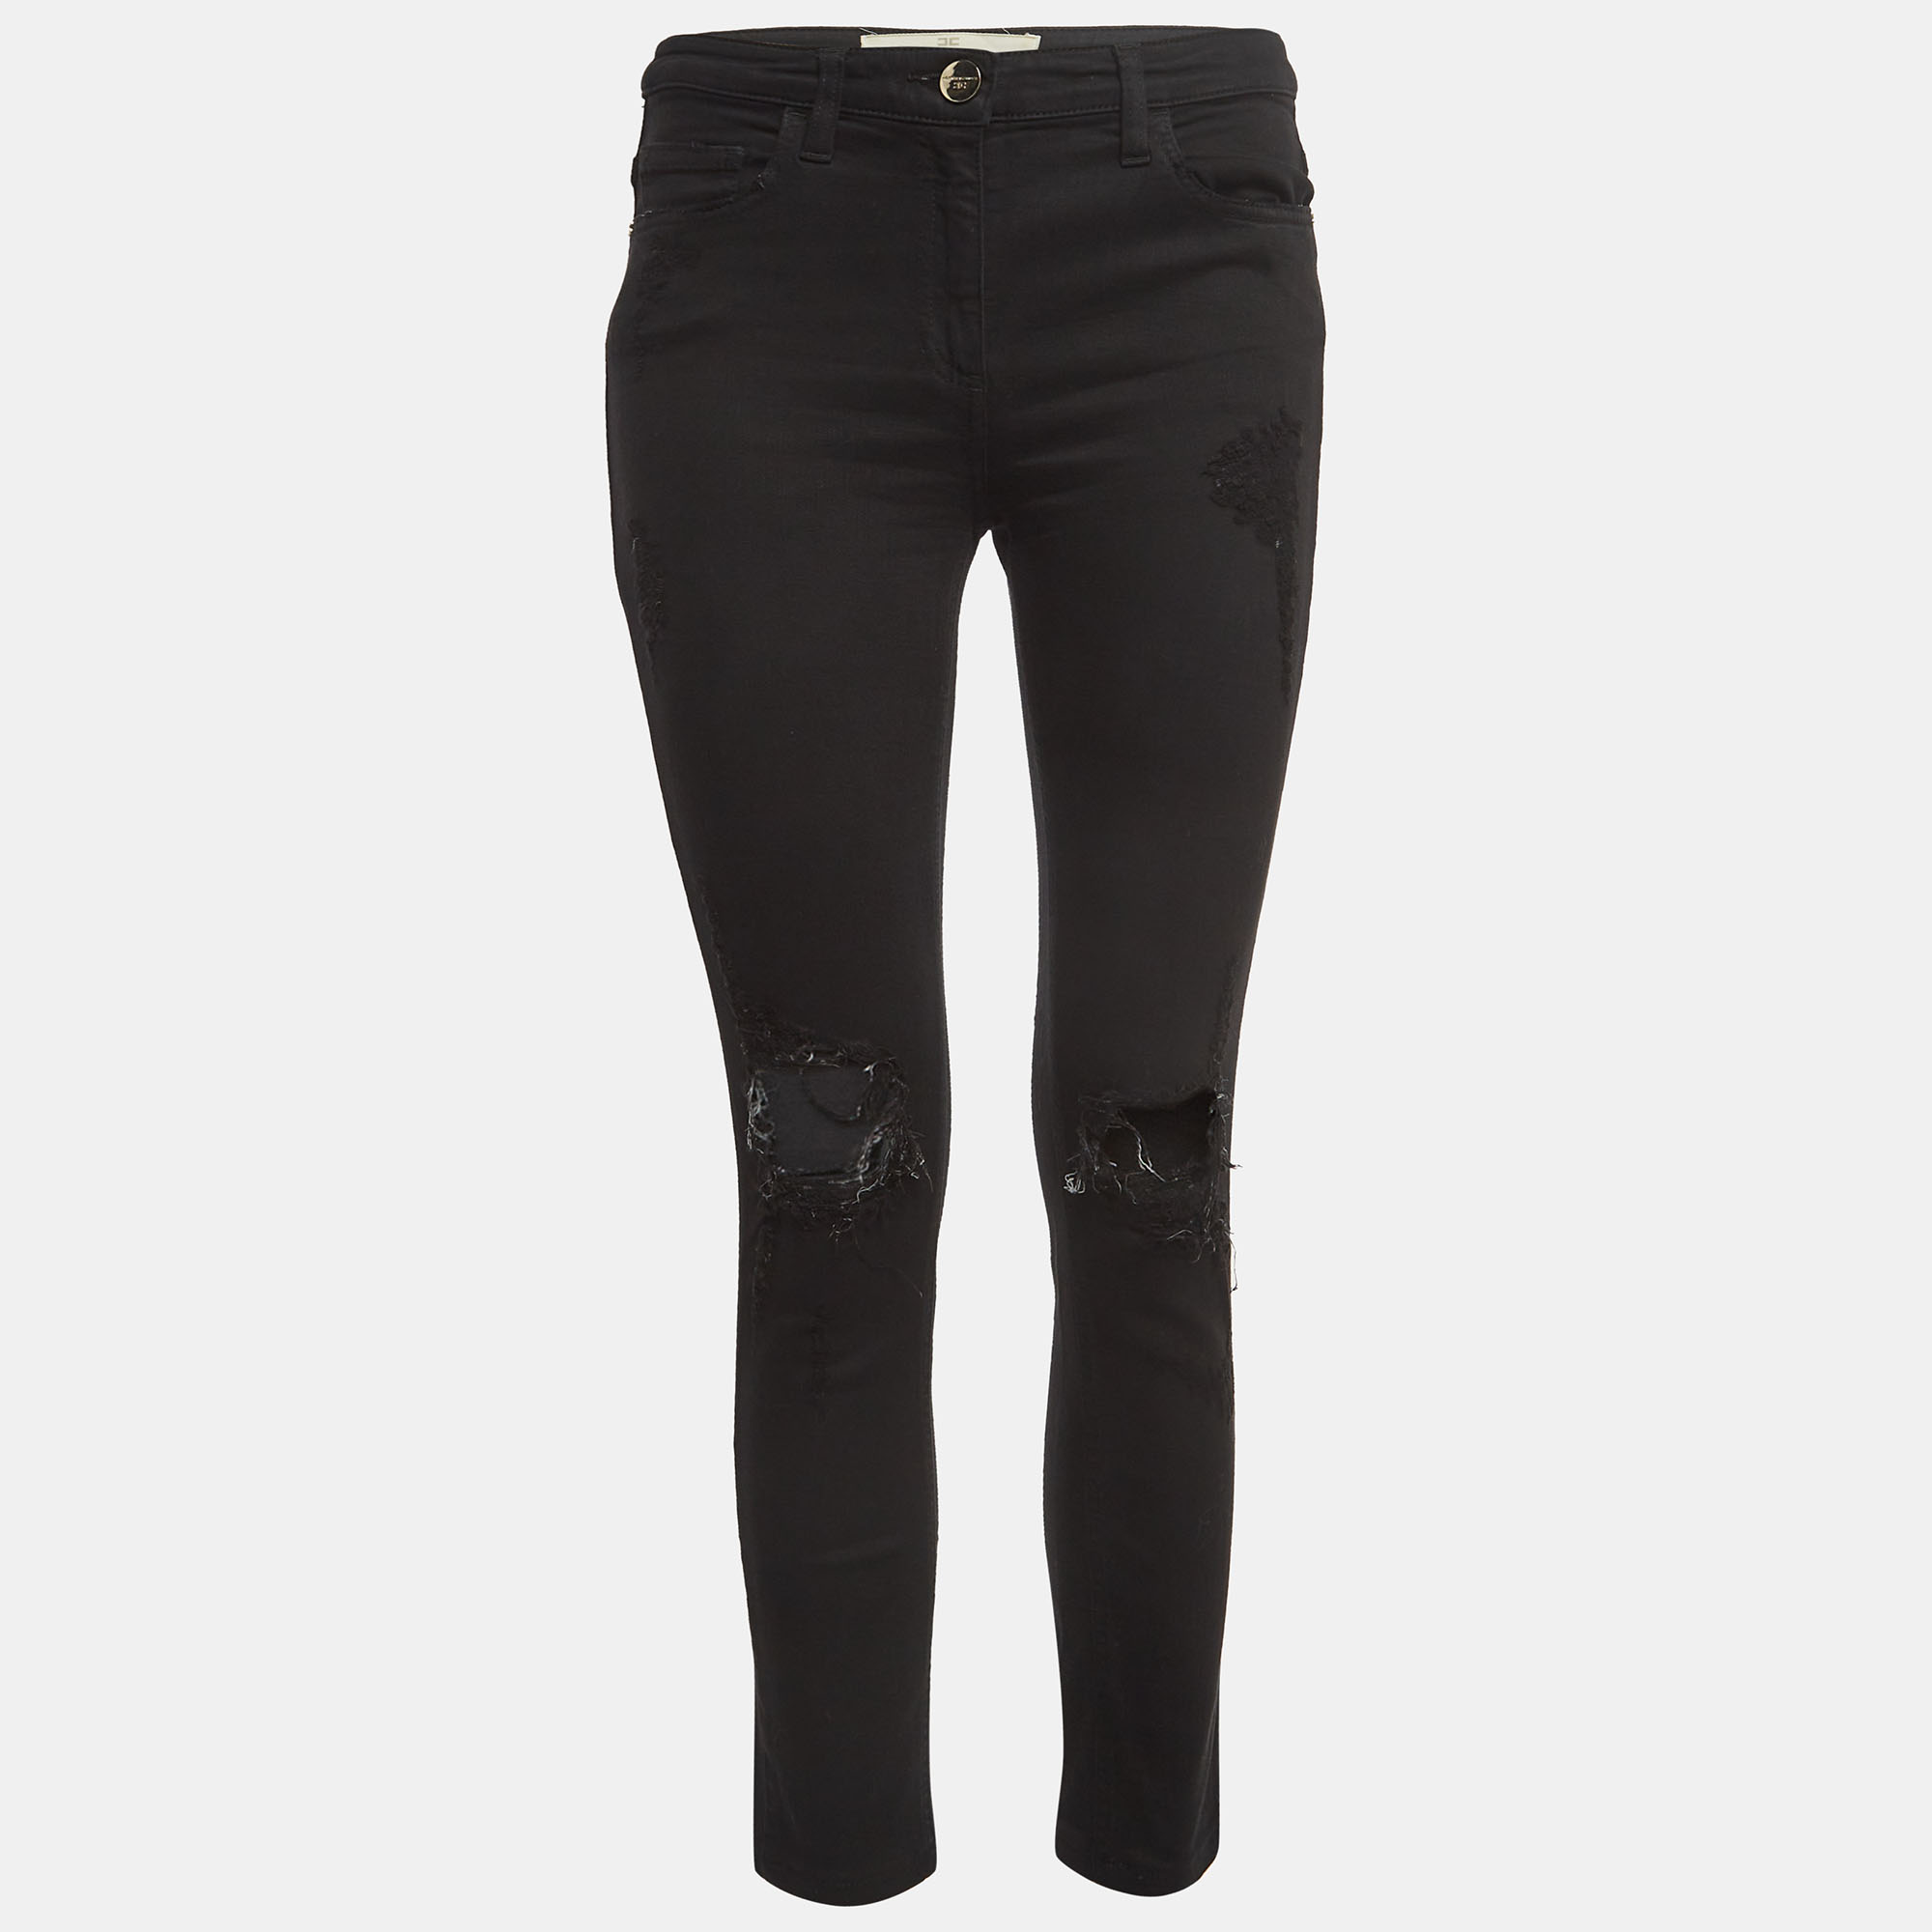 Pre-owned Elisabetta Franchi Black Distressed Denim Skinny Jeans M Waist 30"